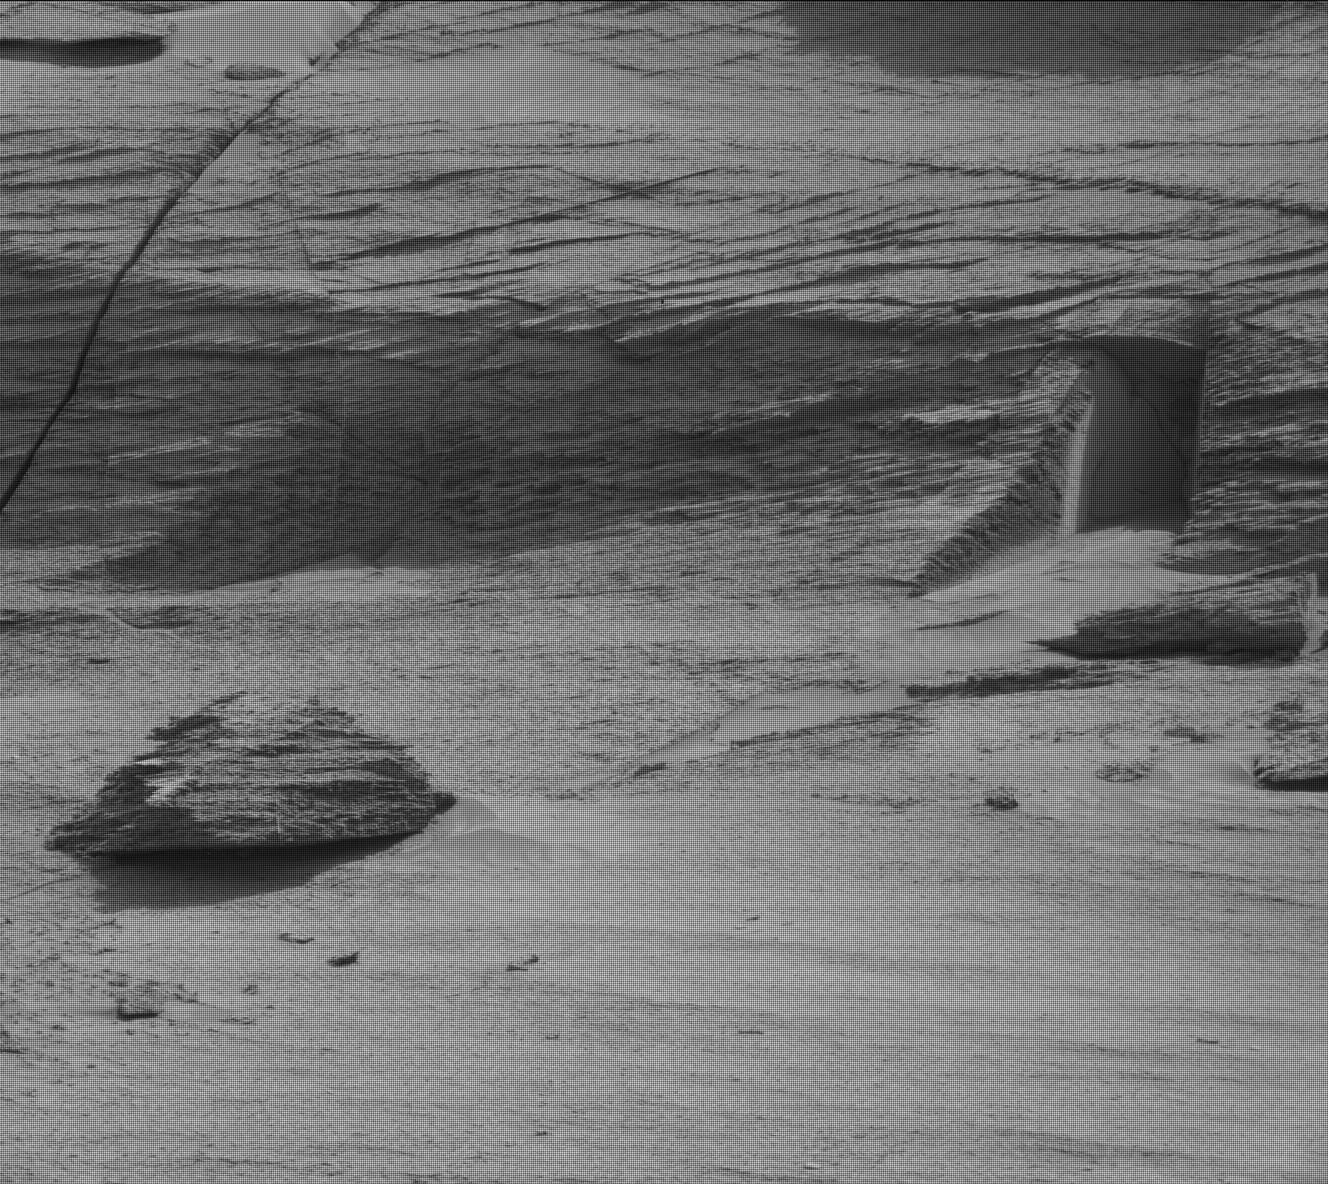 Raw Curiosity camera image centered on the 'door.'